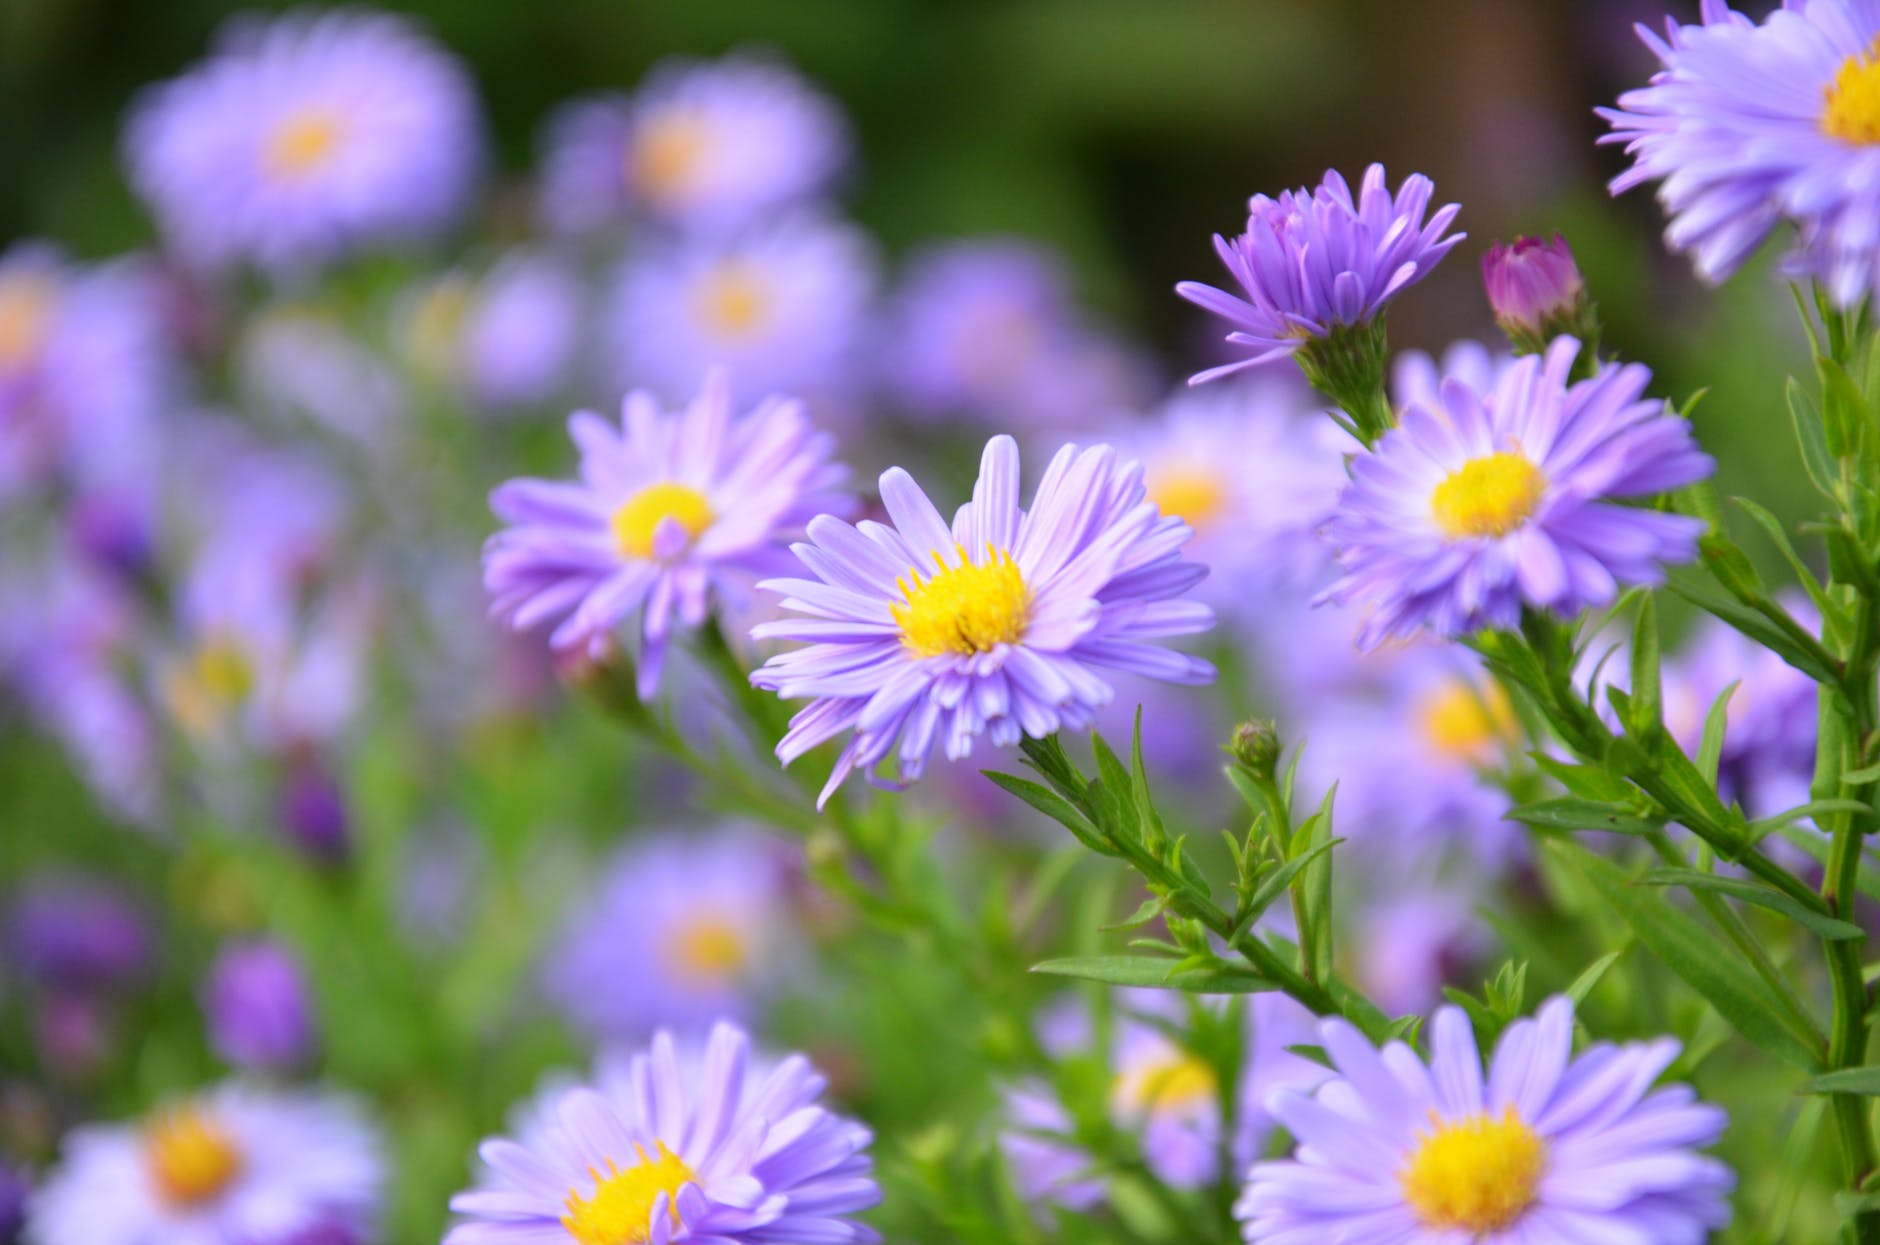 focus photography of purple daisy flowers